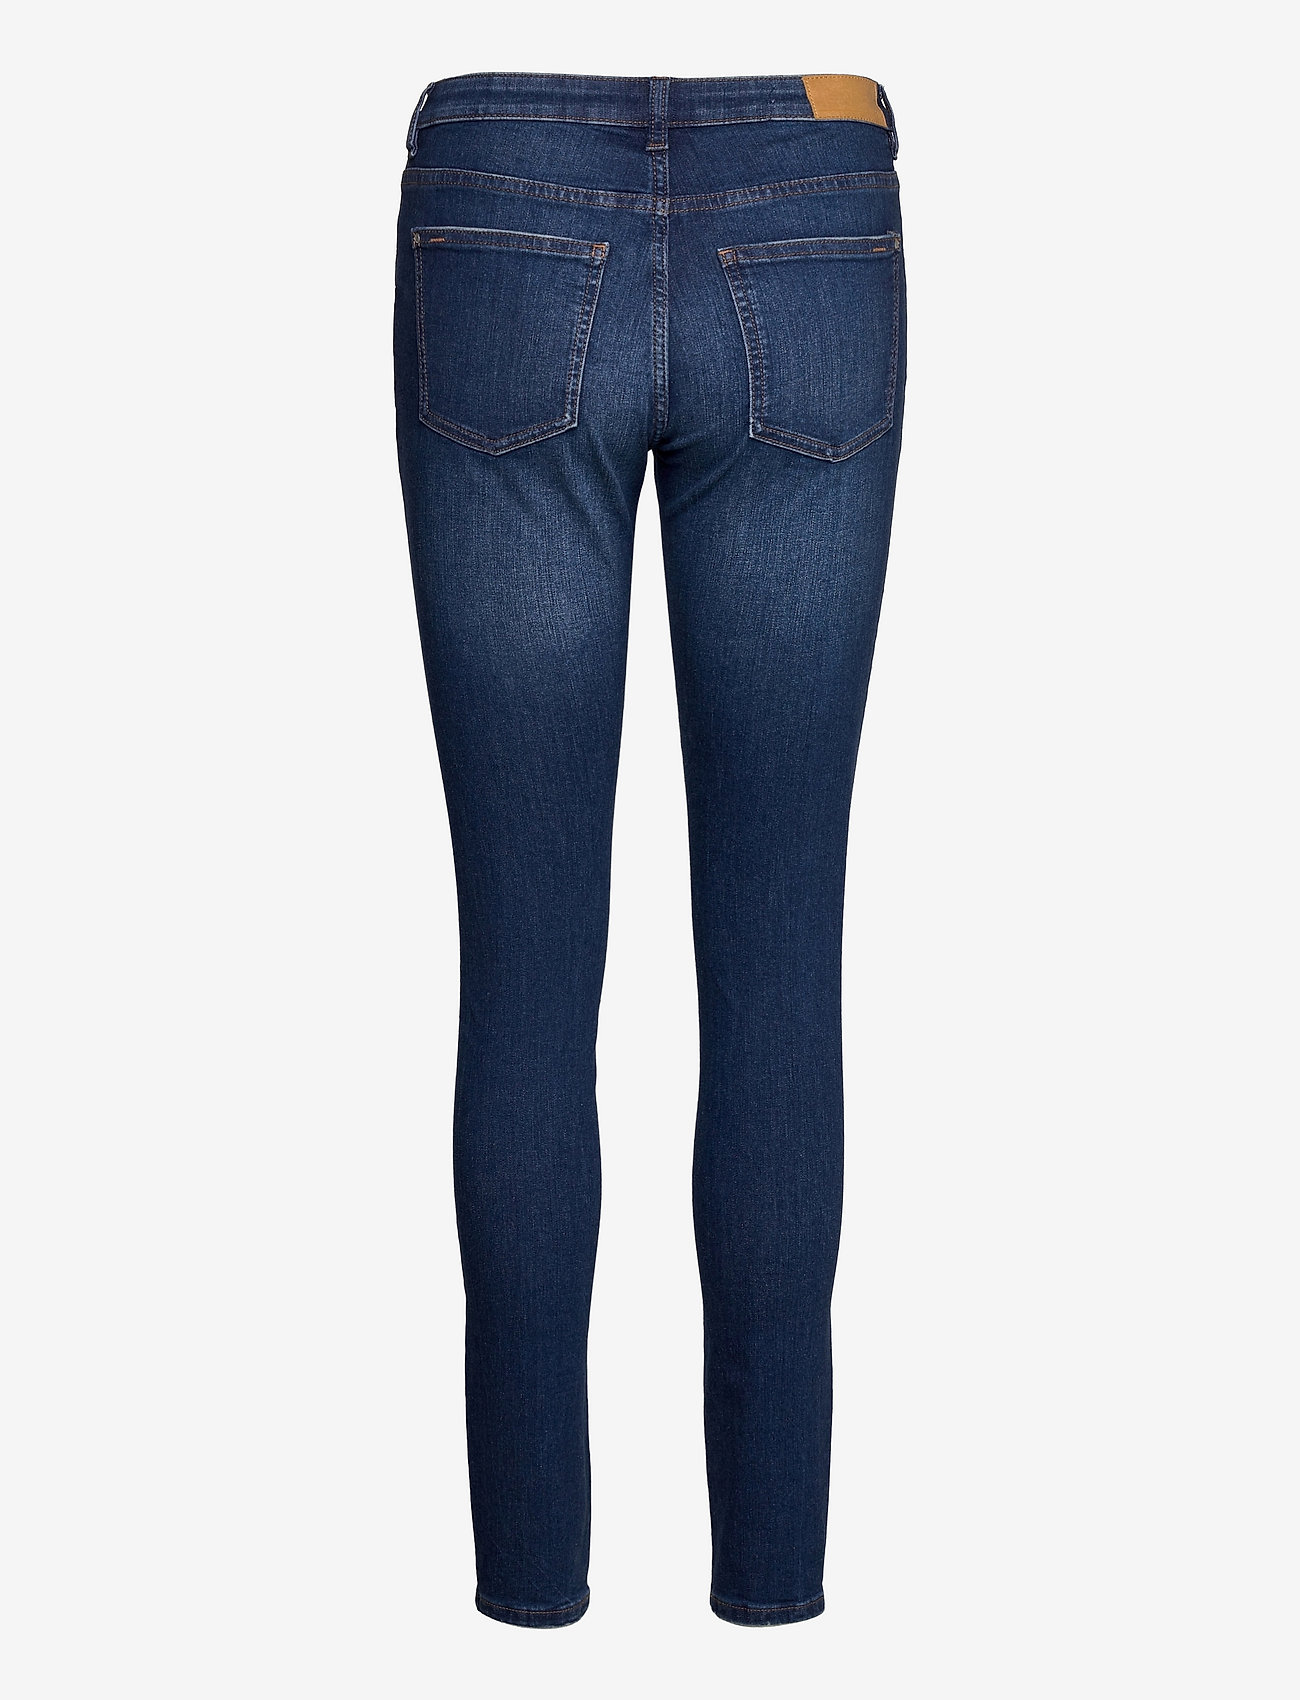 EDC by Esprit - Pants denim - skinny jeans - blue dark wash - 1